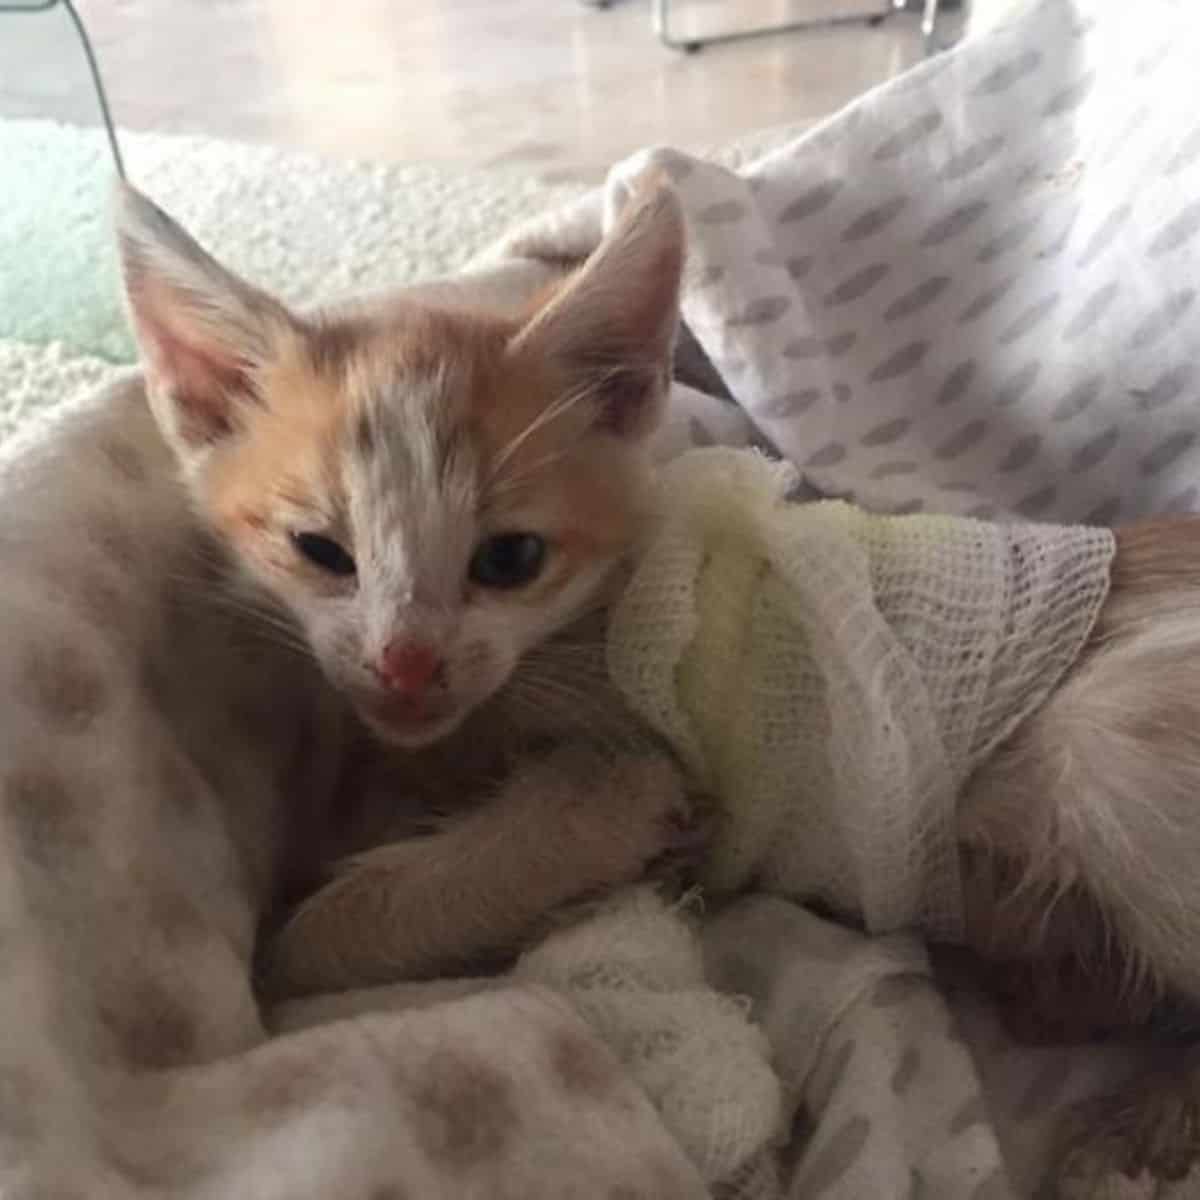 the injured kitten is lying on the blanket